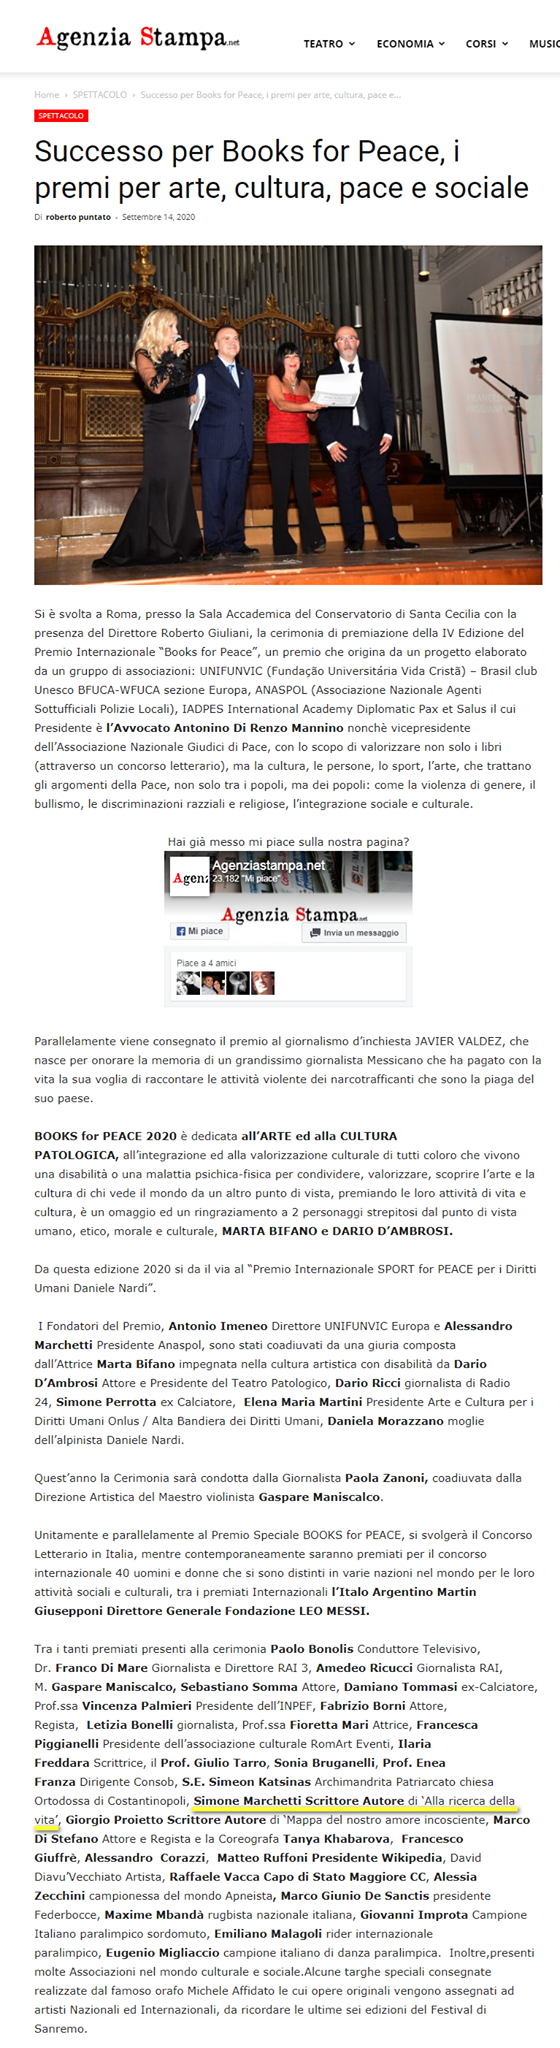 2020-09-15-Agenzia-Stampa